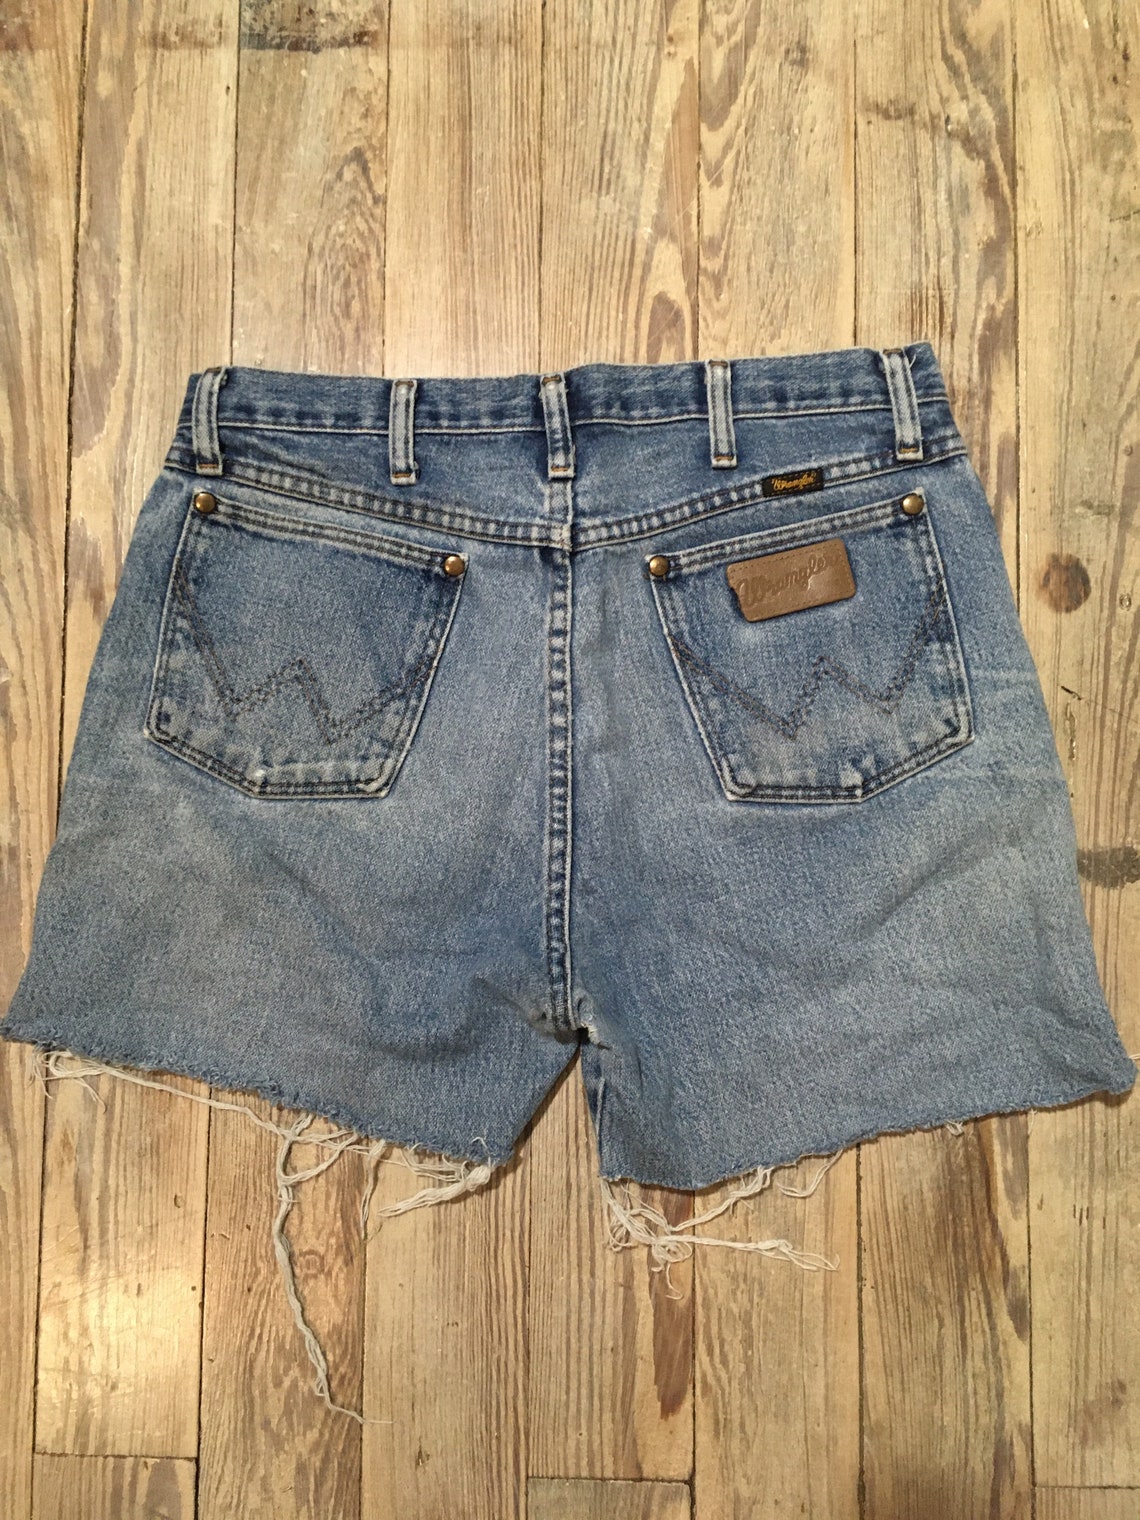 Vintage wrangler jean shorts | Etsy